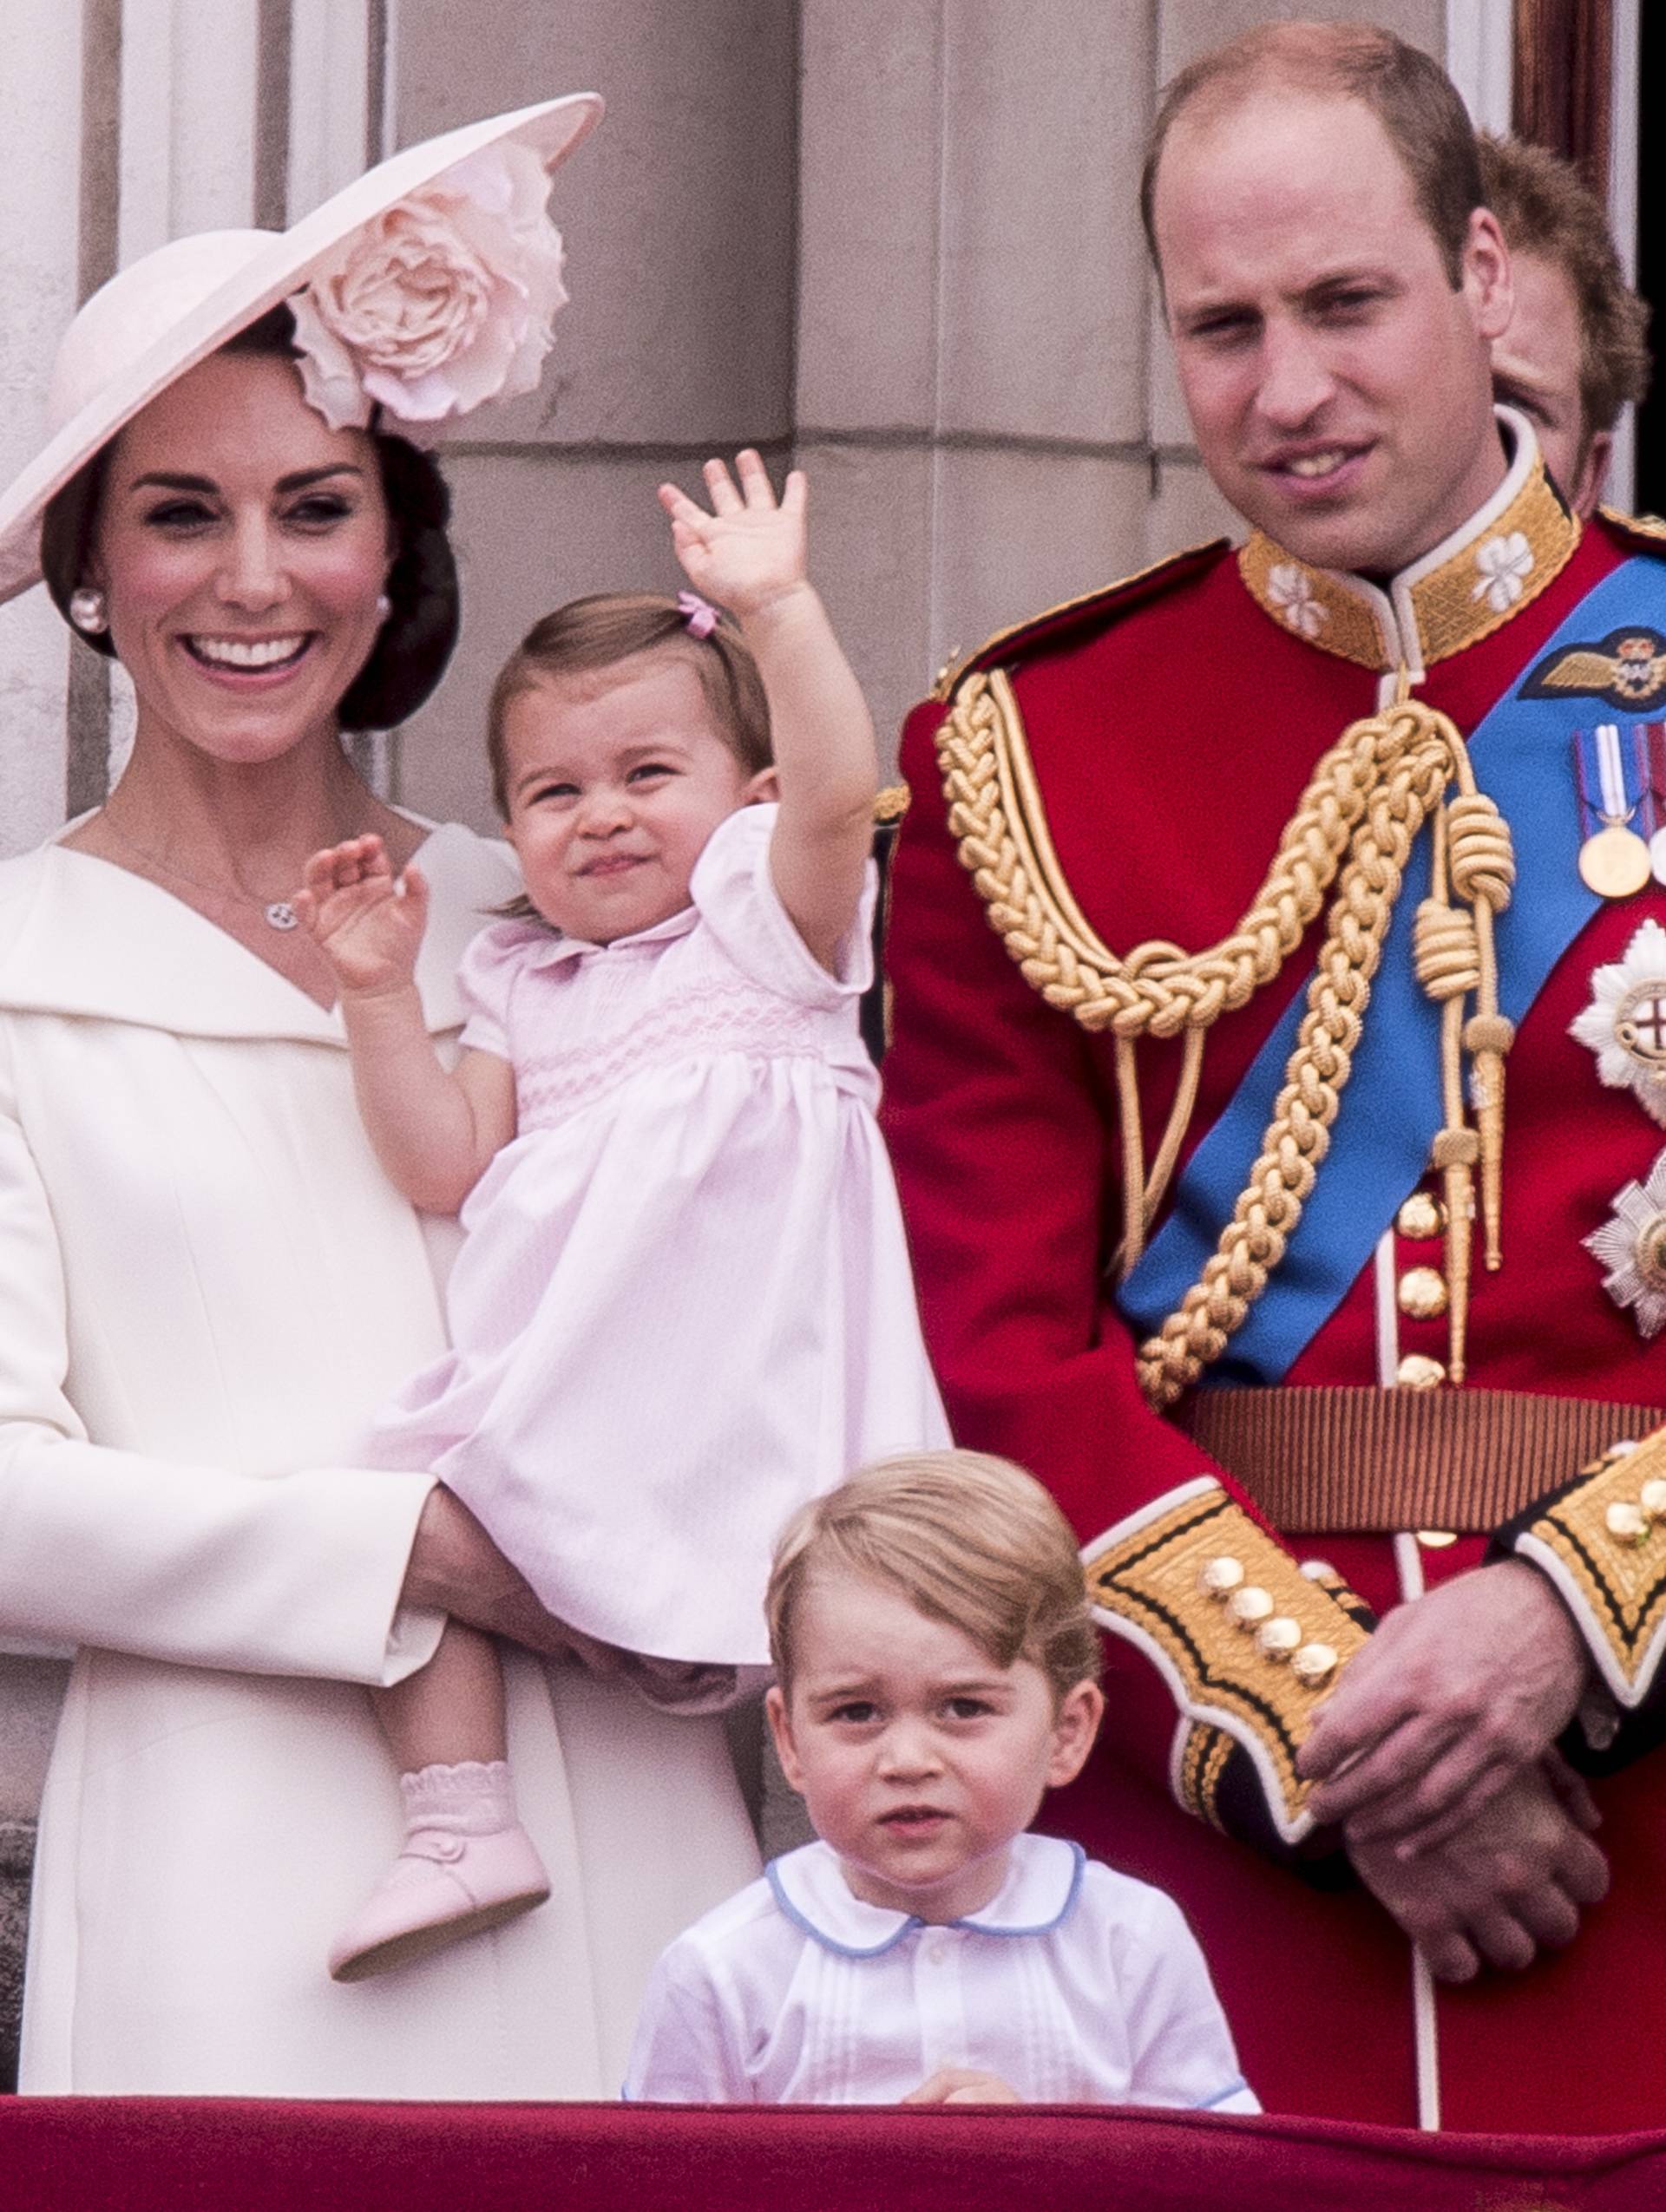 Duchess of Cambridge expecting third child